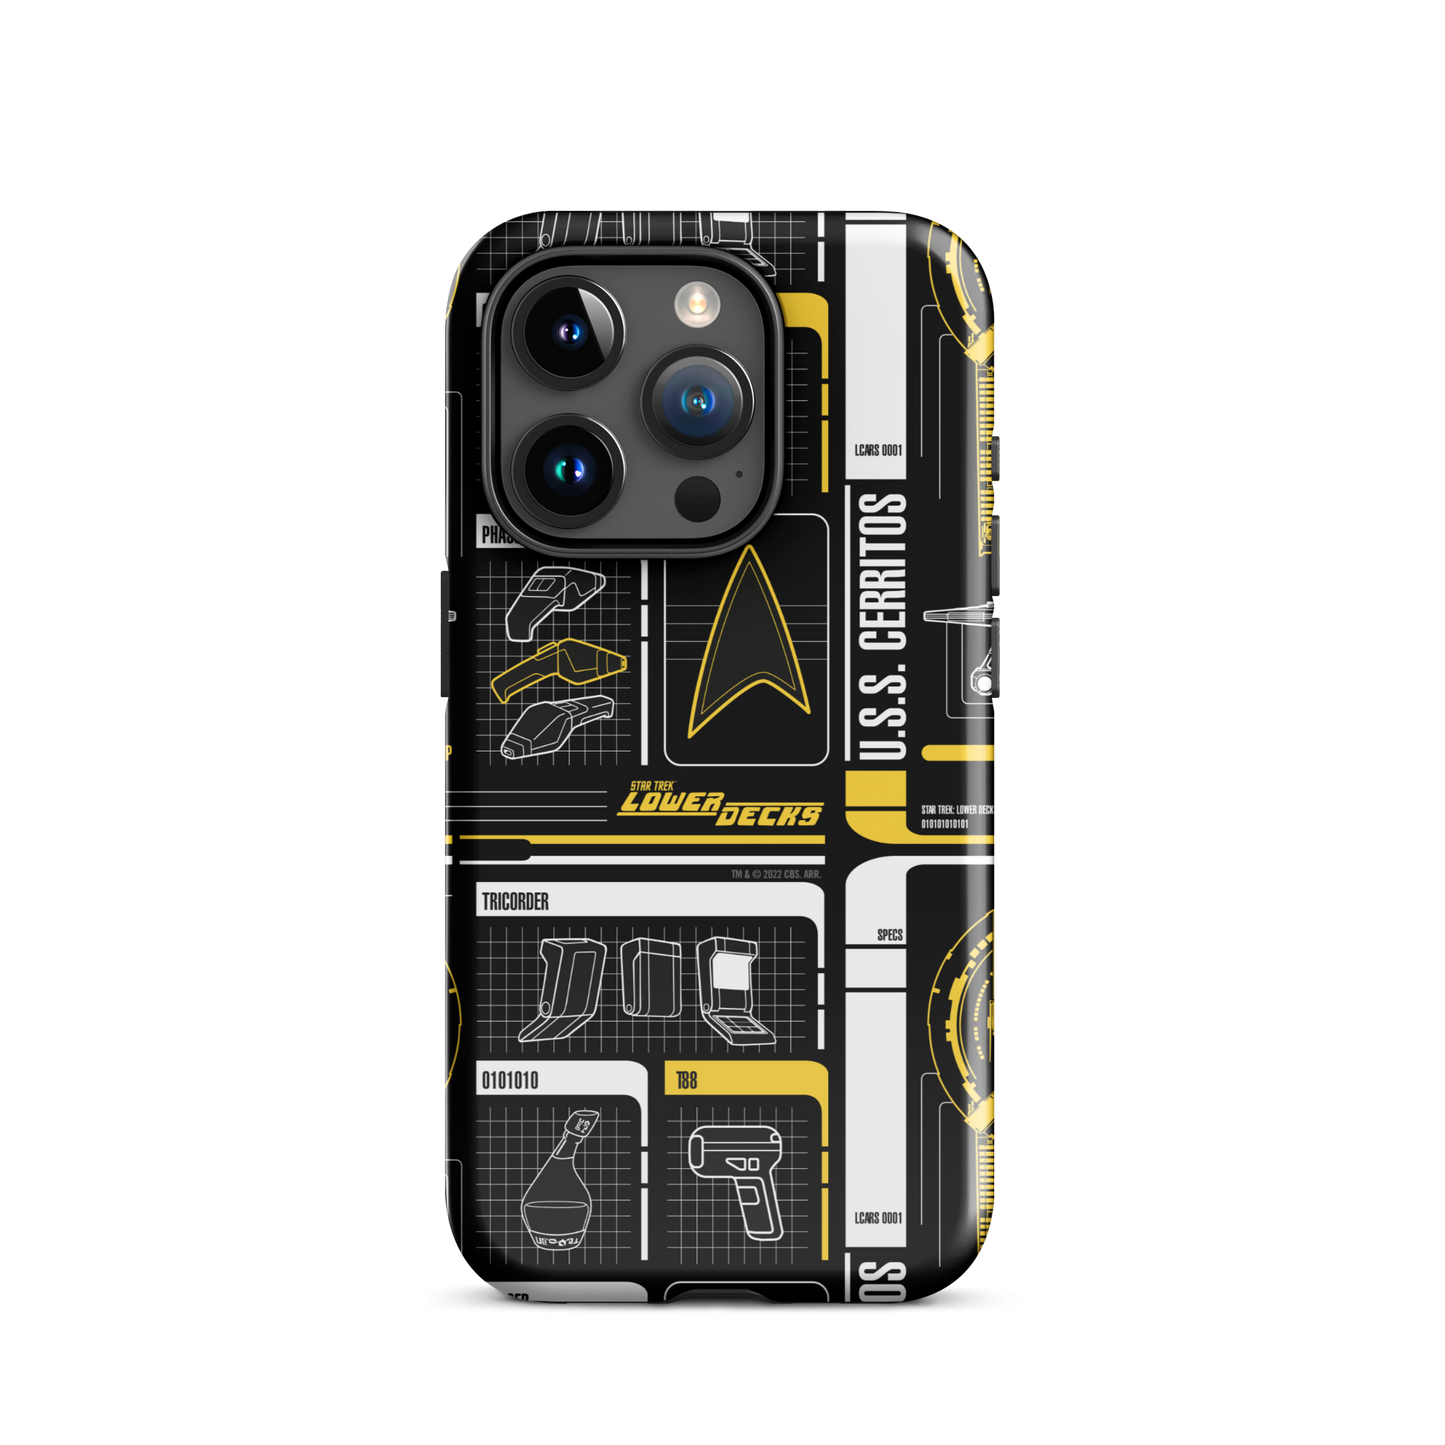 Star Trek: Lower Decks U.S.S Cerritos Pattern Tough Phone Case - iPhone